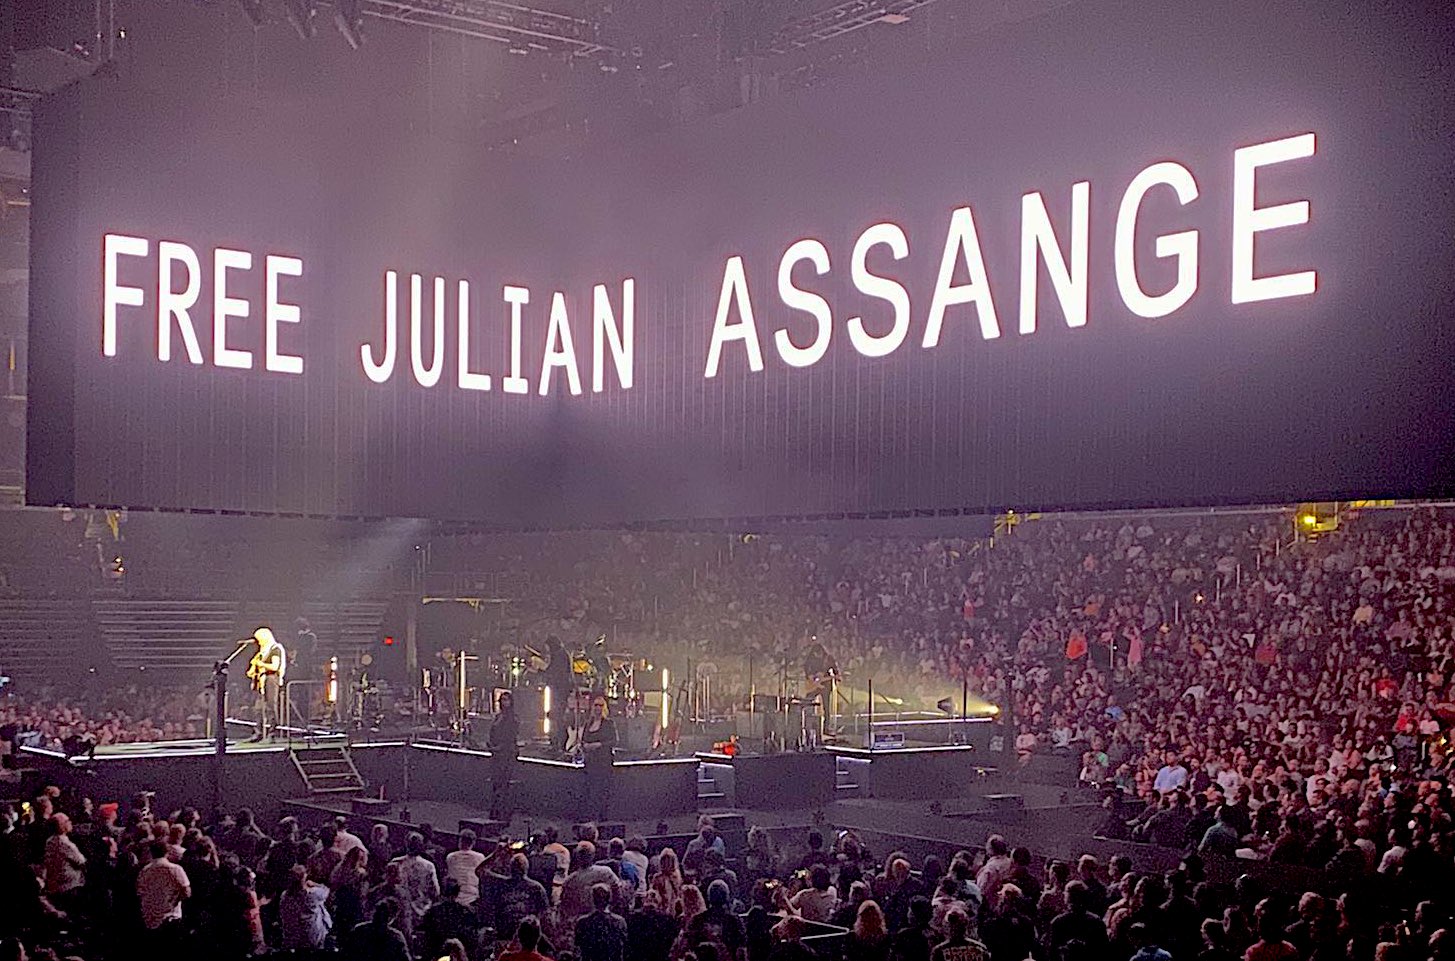 Concert to benefit Julian Assange